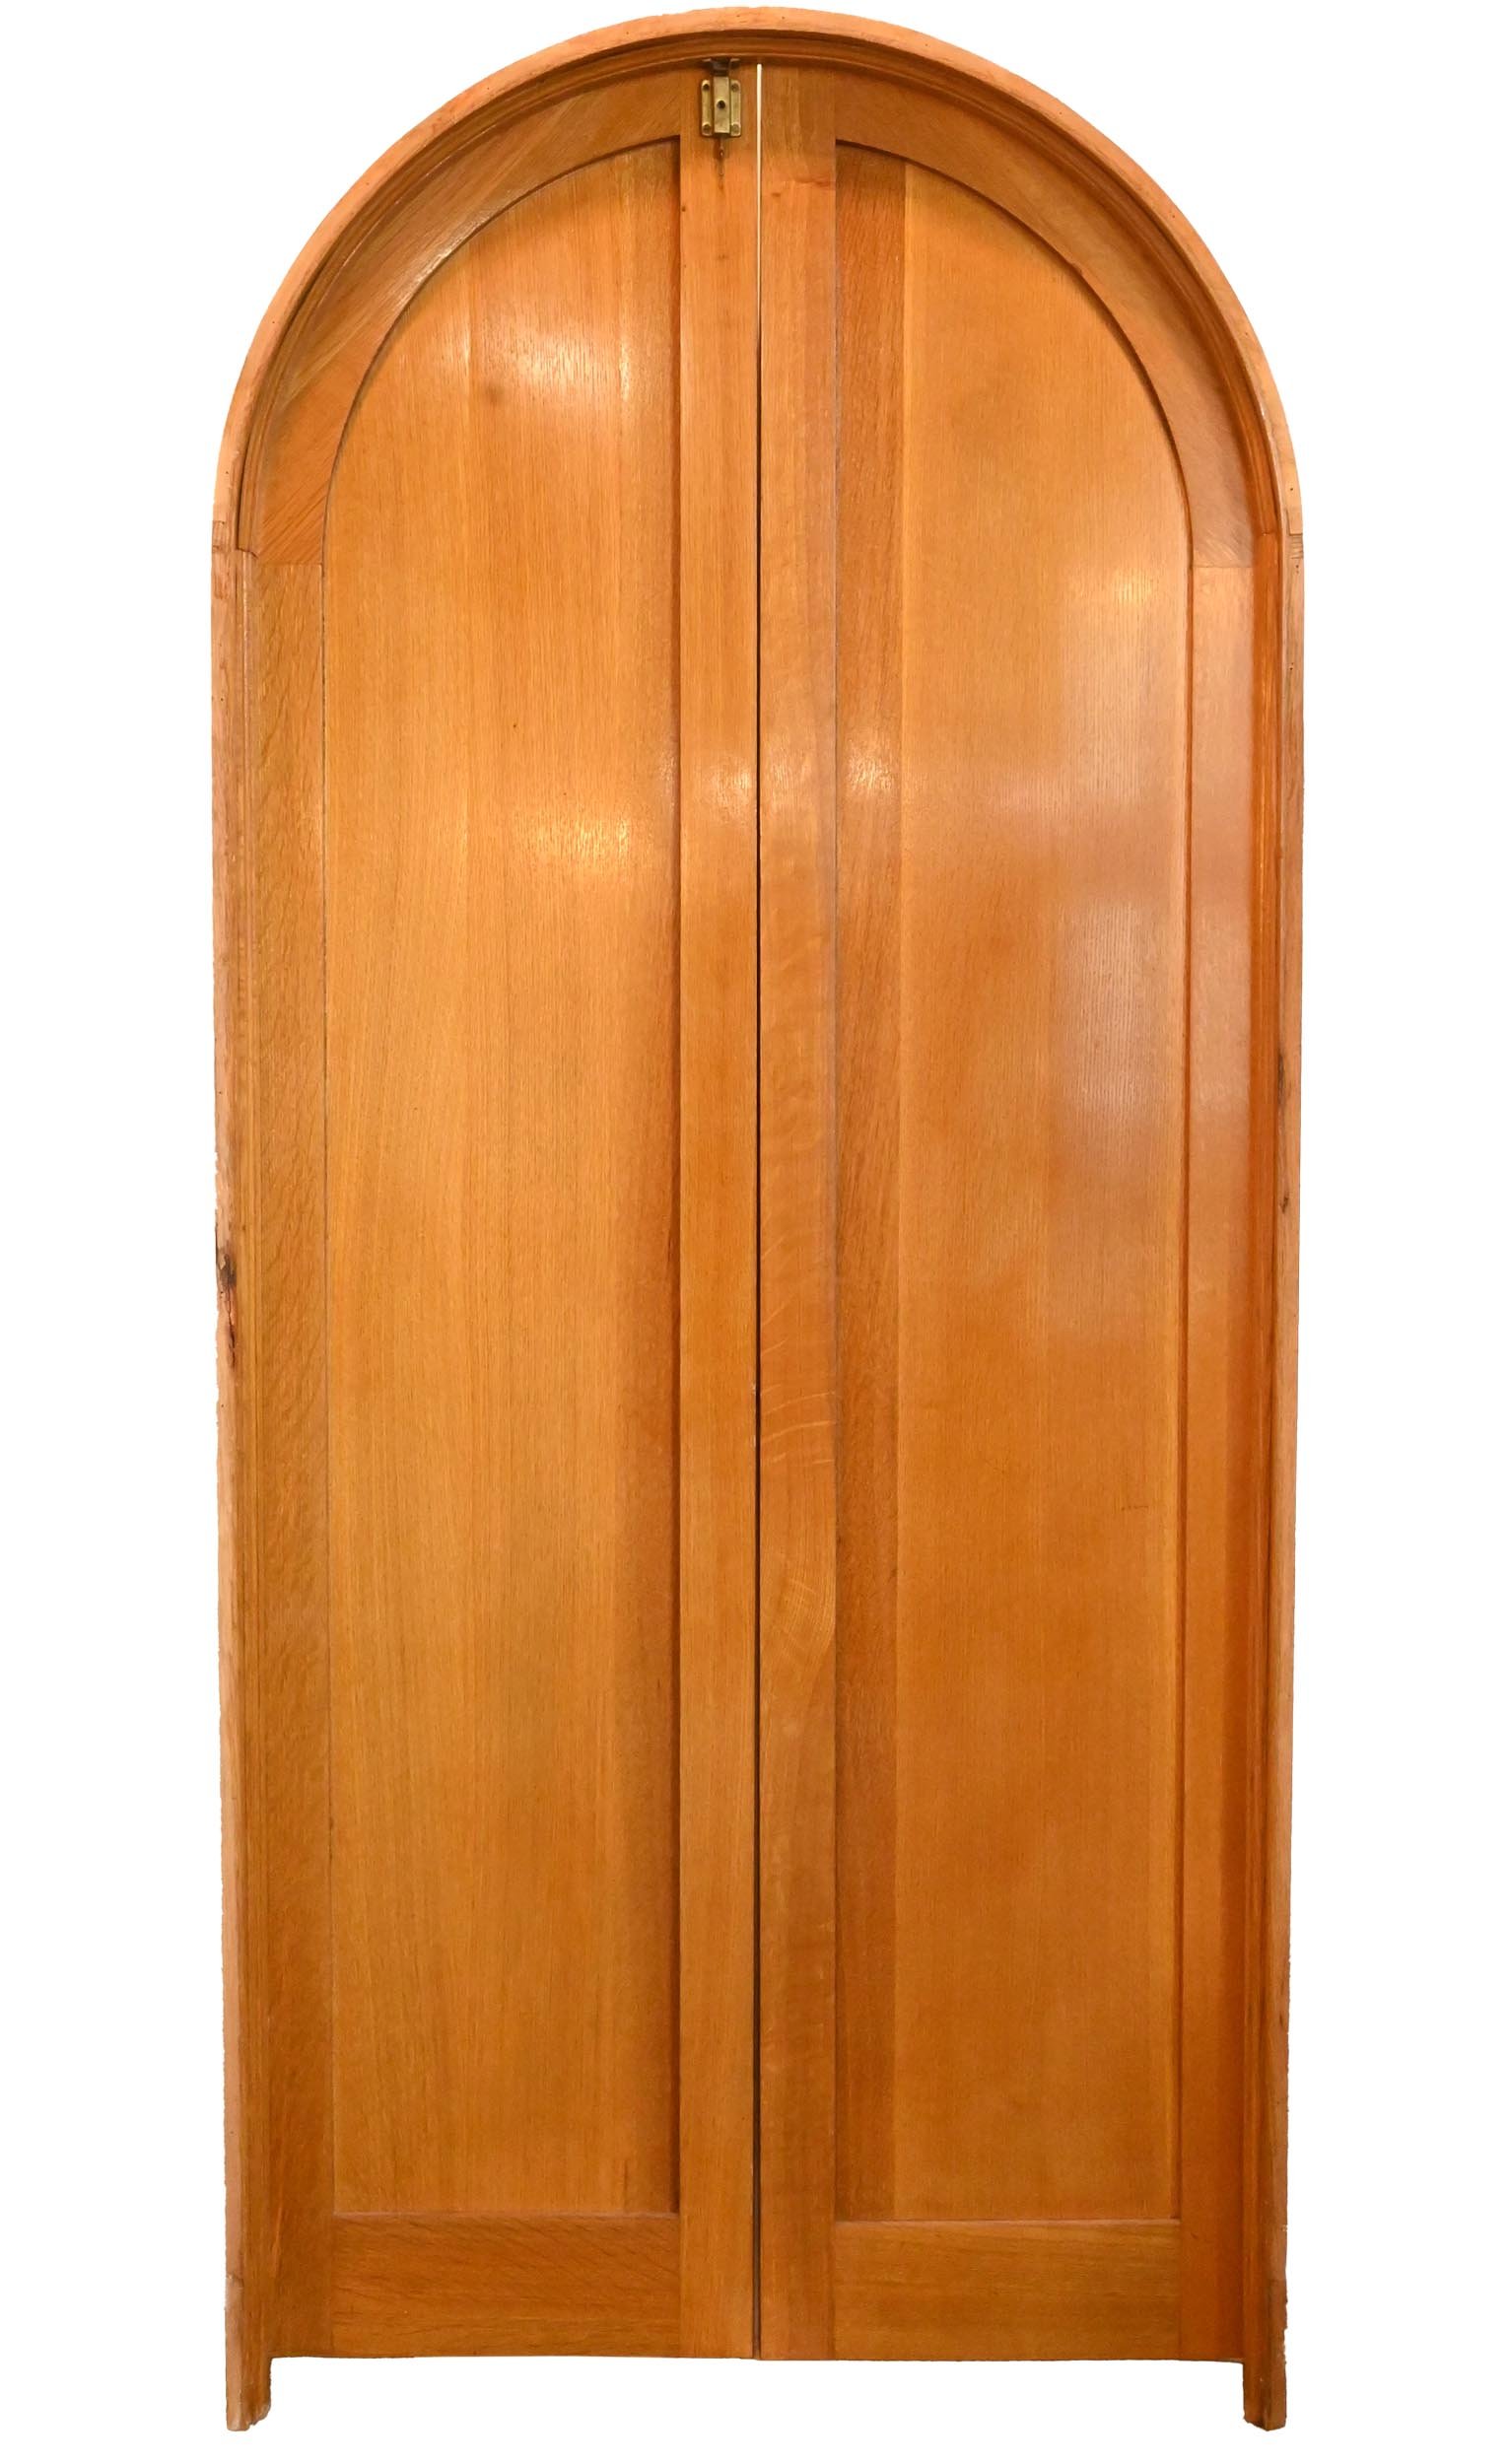 round arch double door closet entry set of quarter sawn oak